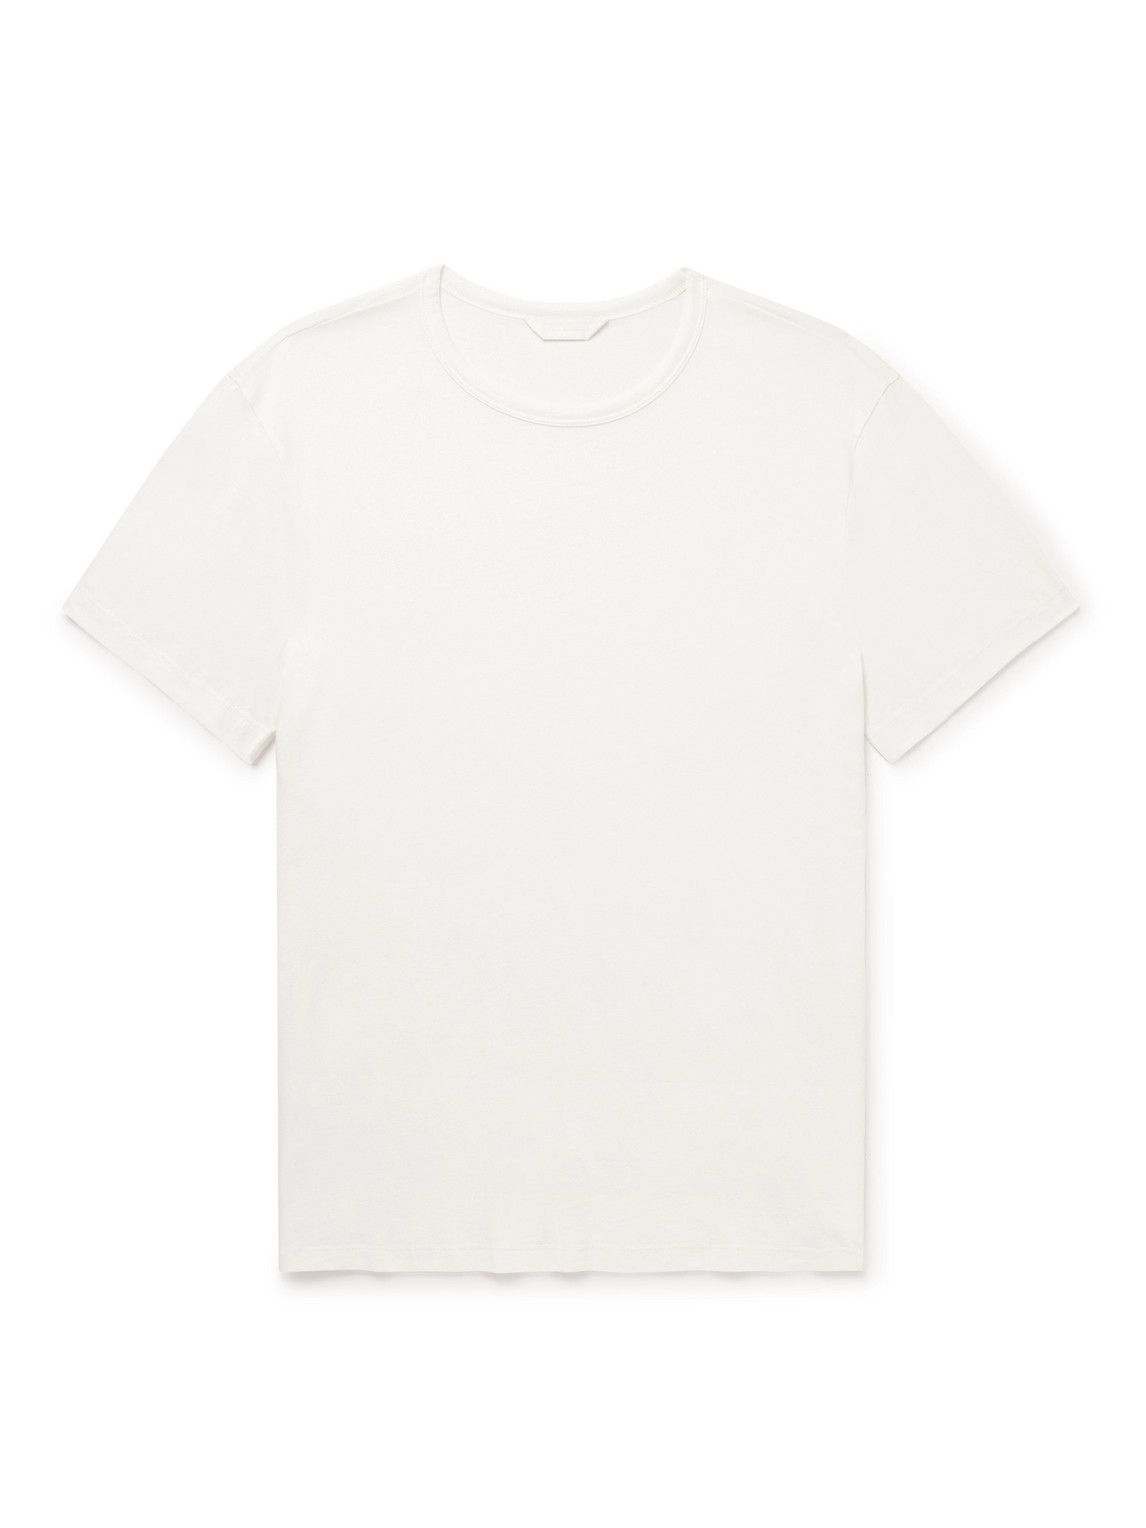 Club Monaco - Luxe Featherweight Cotton-Jersey T-Shirt - Men - White - S von Club Monaco